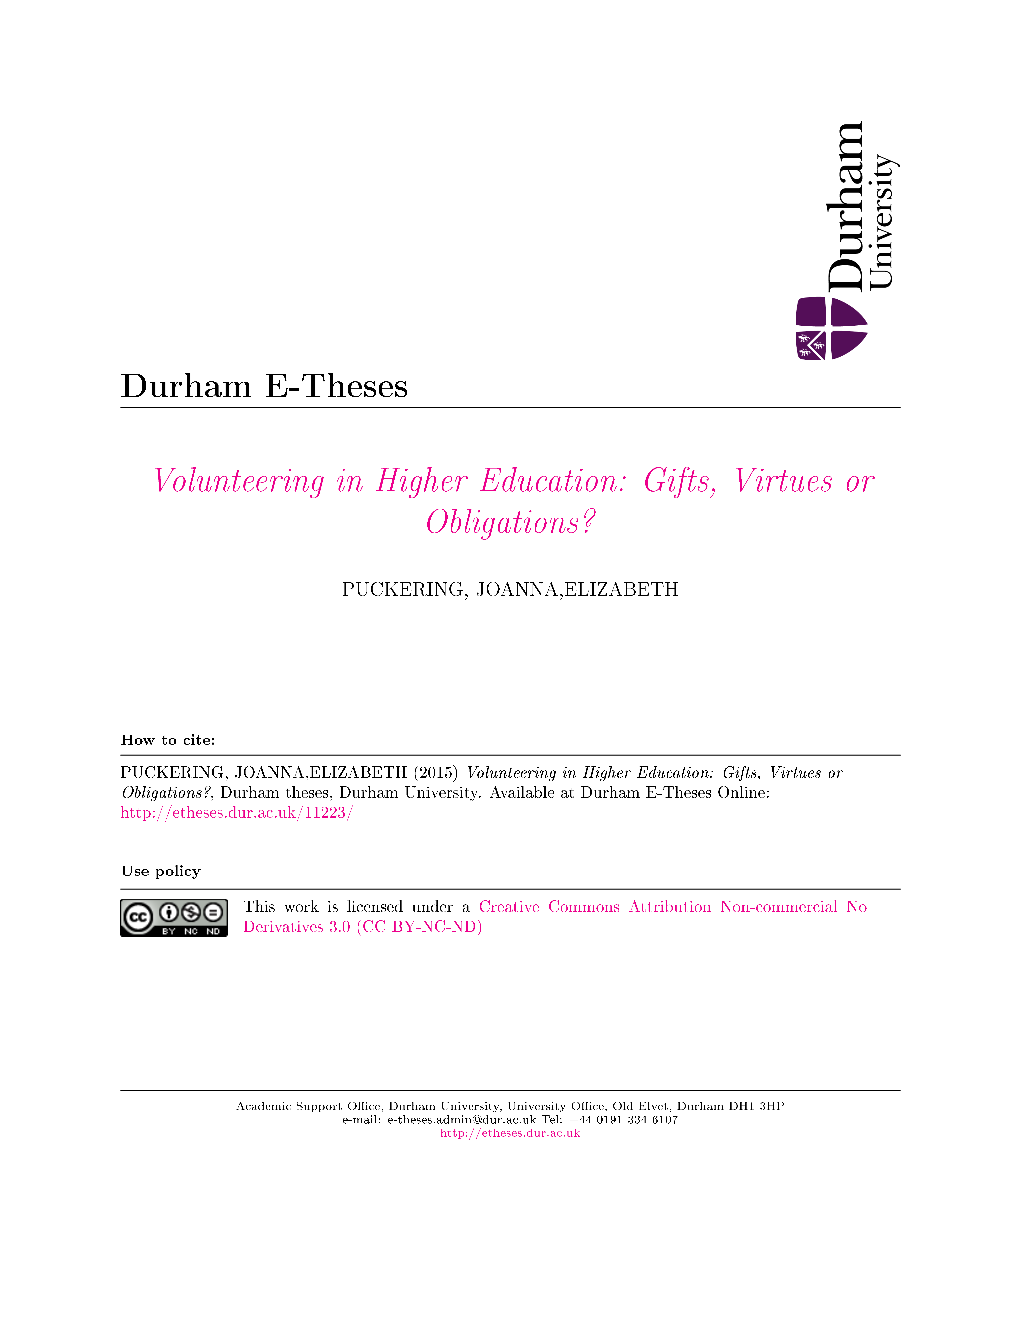 Volunteering in Higher Education: Gifts, Virtues Or Obligations?